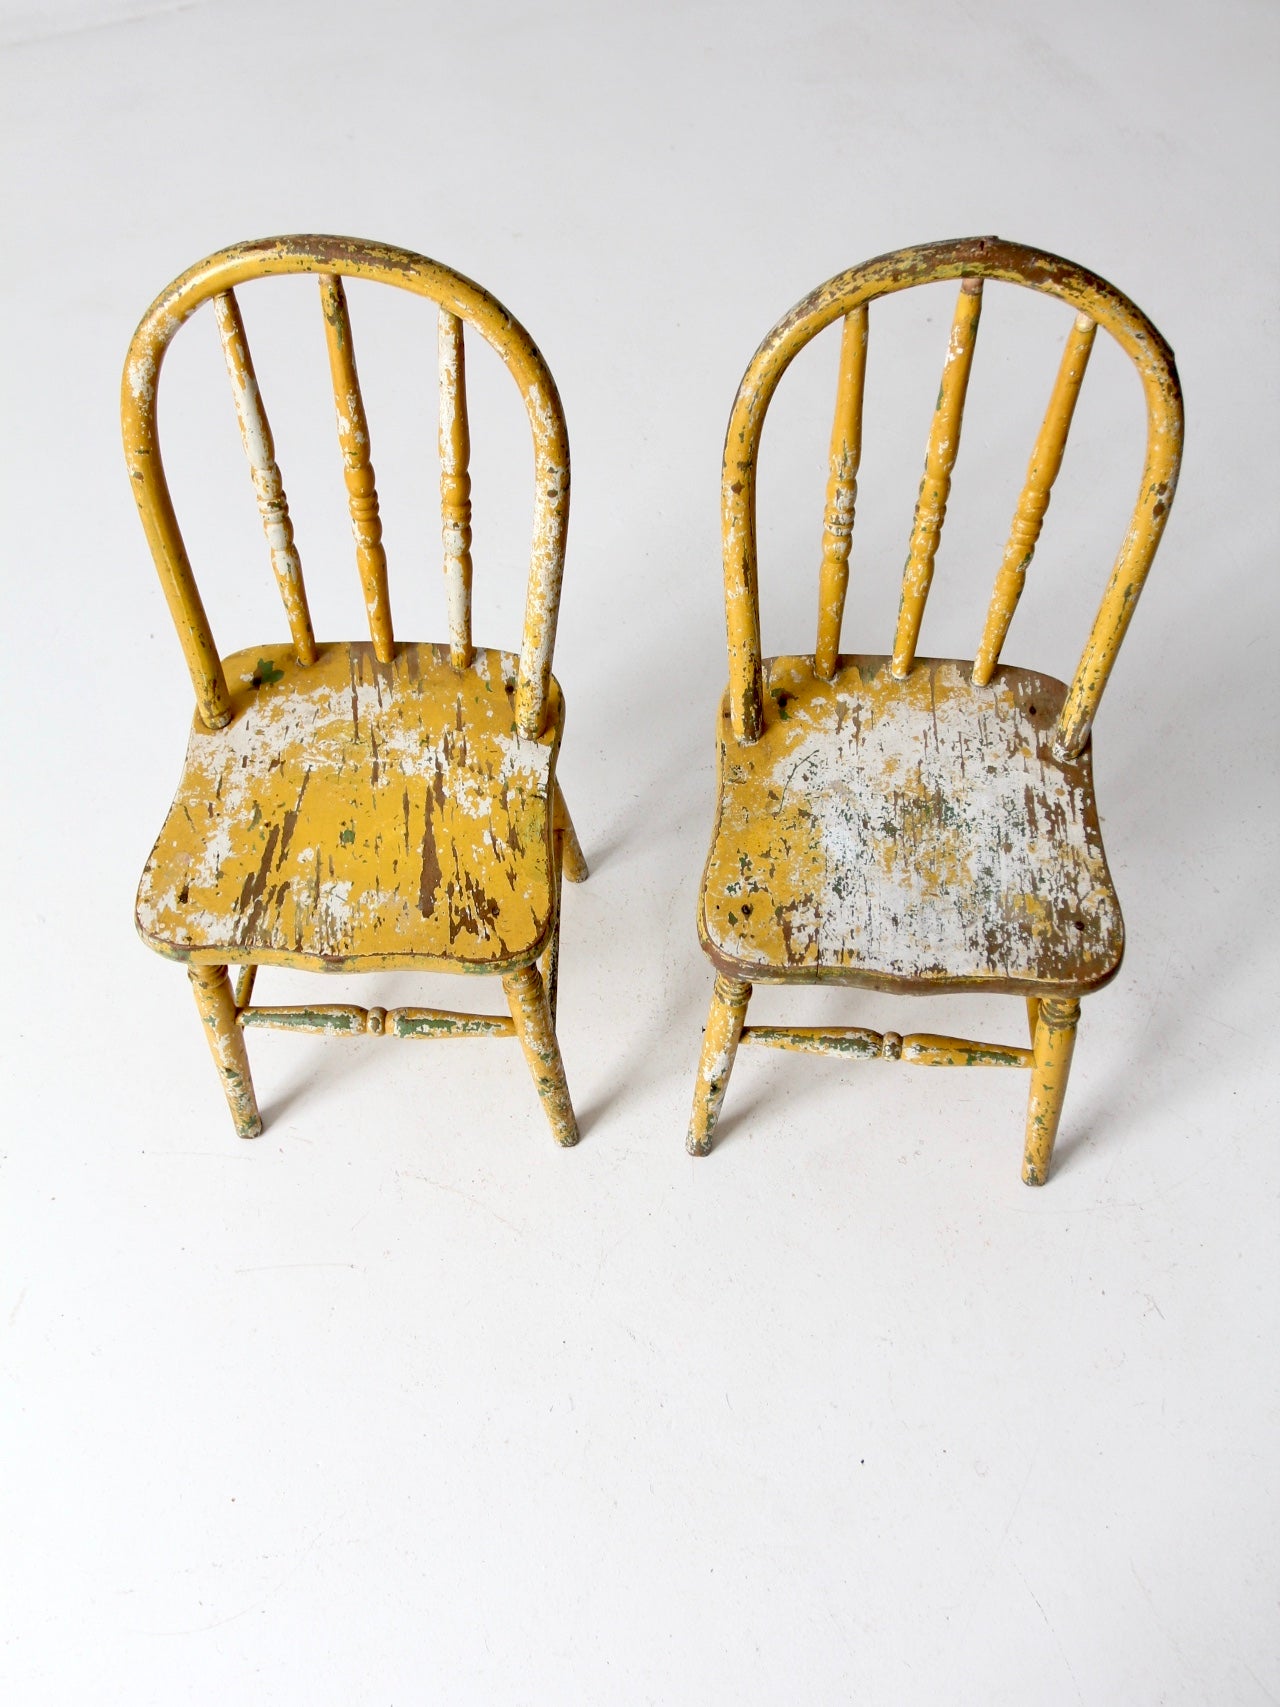 vintage children's chairs set of 2